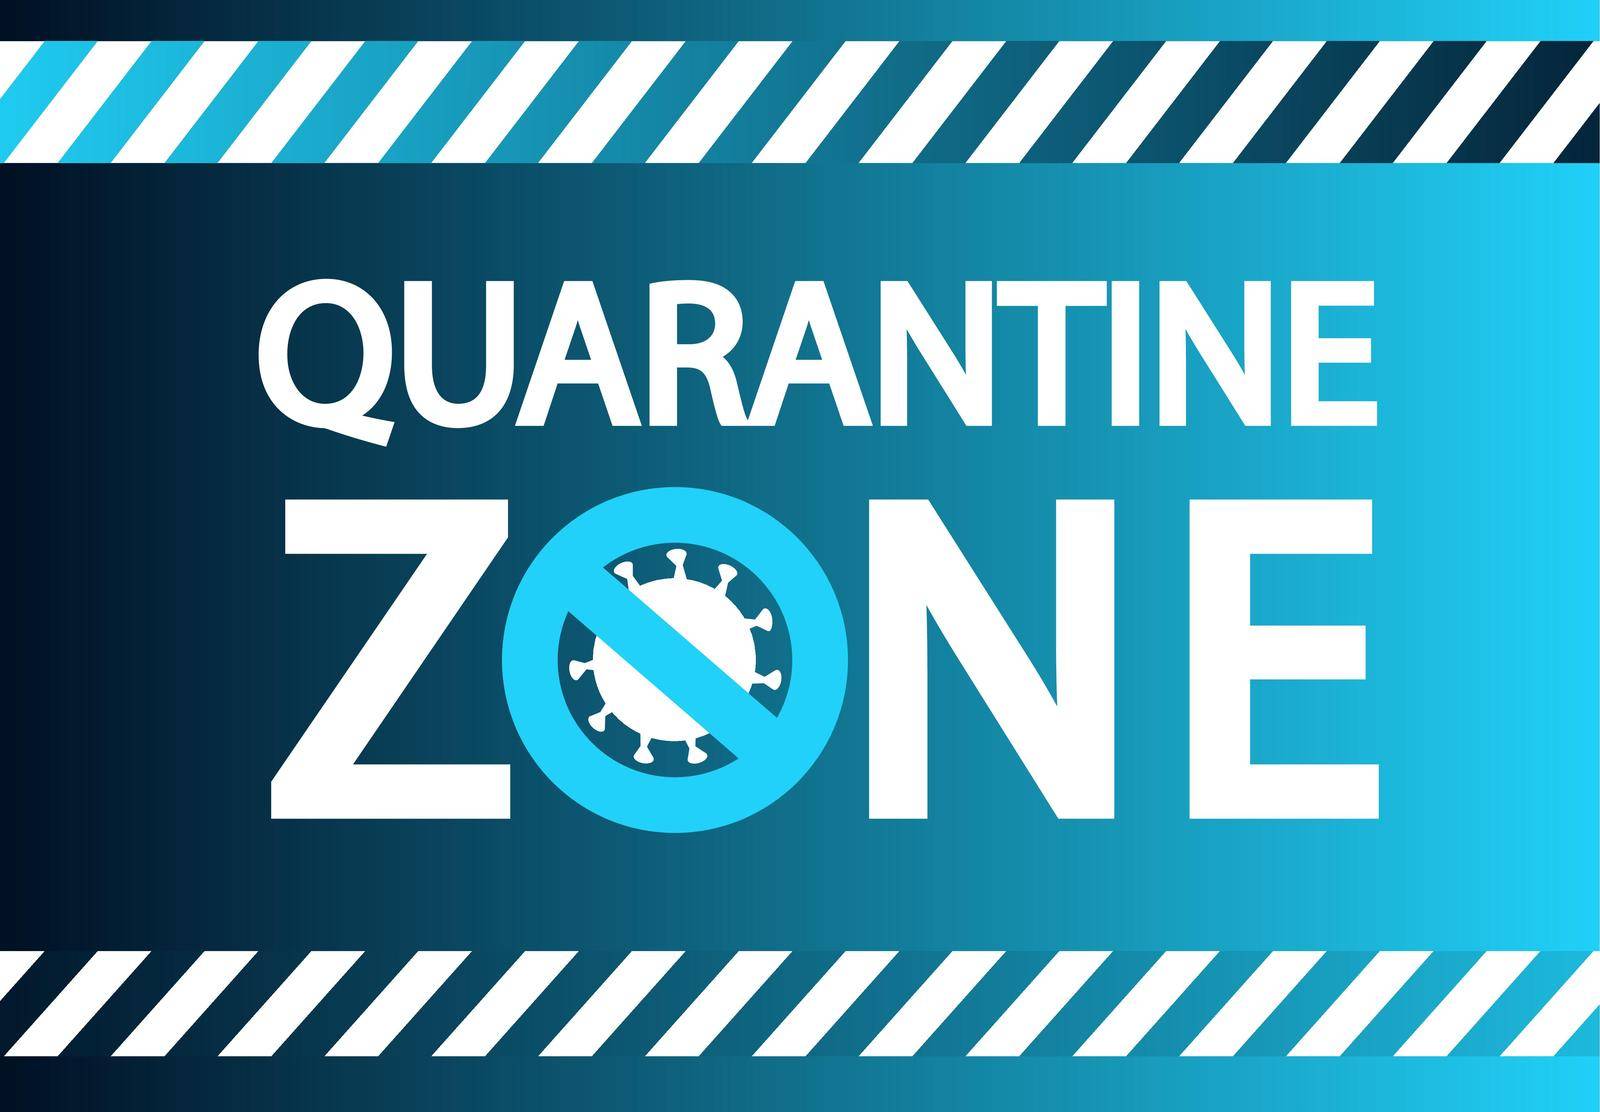 Coronavirus quarantine zone concept background. by ku4erashka